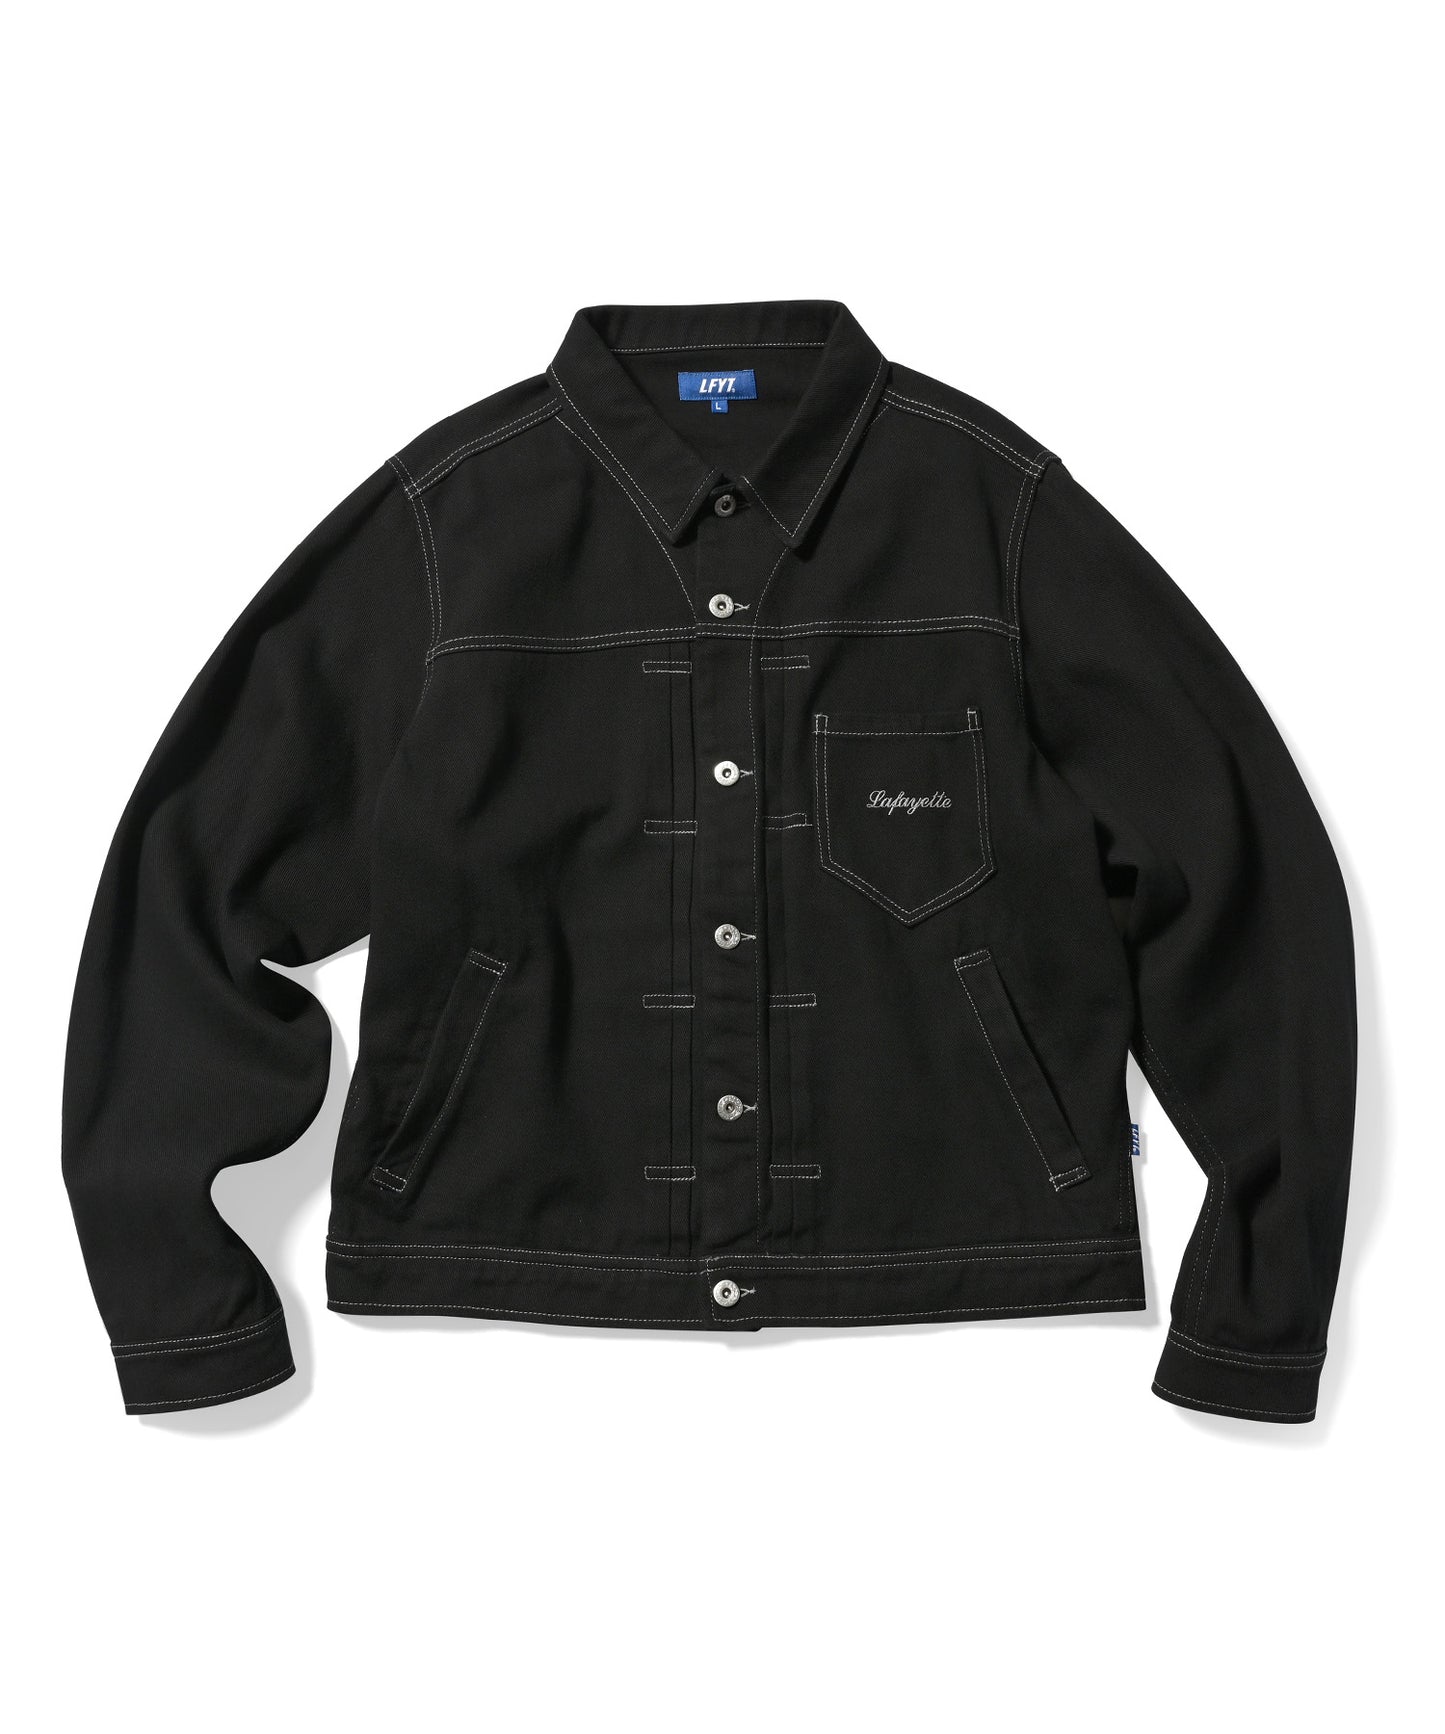 LFYT Lafayette Cotton Twill Trucker Jacket